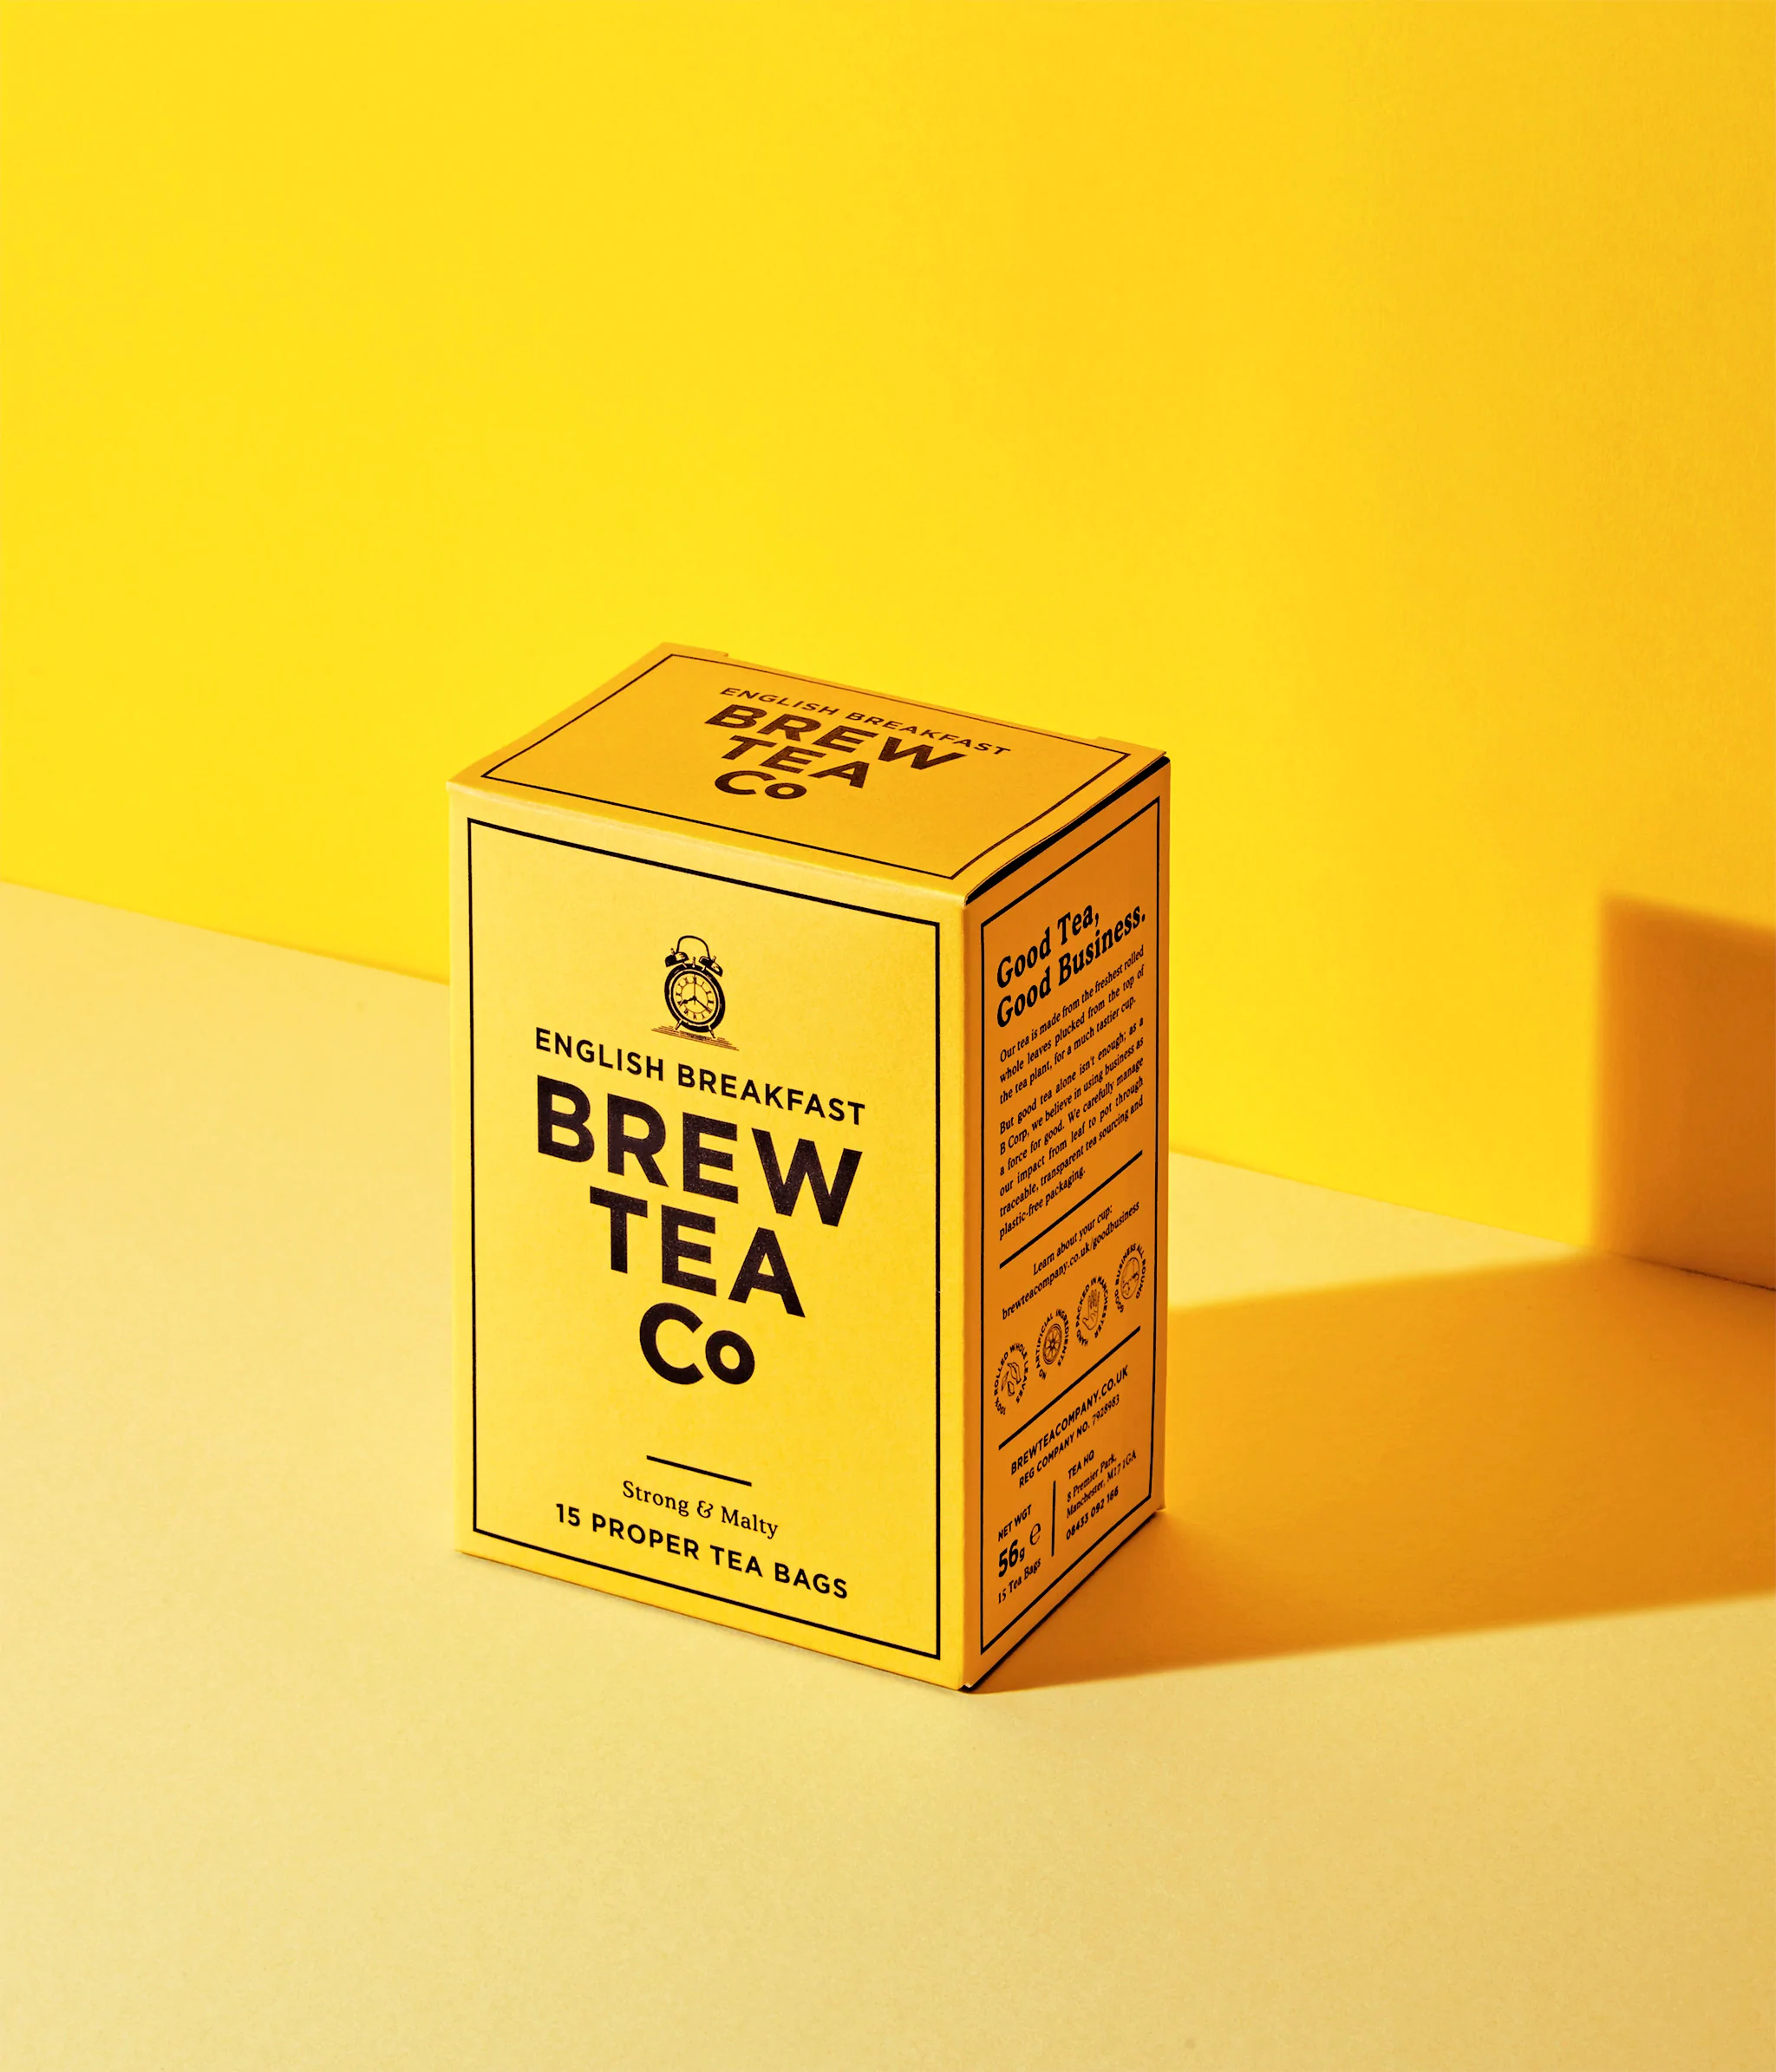 Brew Tea Co. English Breakfast Strong & Malty 15 Proper Tea Bags 56g / 1.97oz